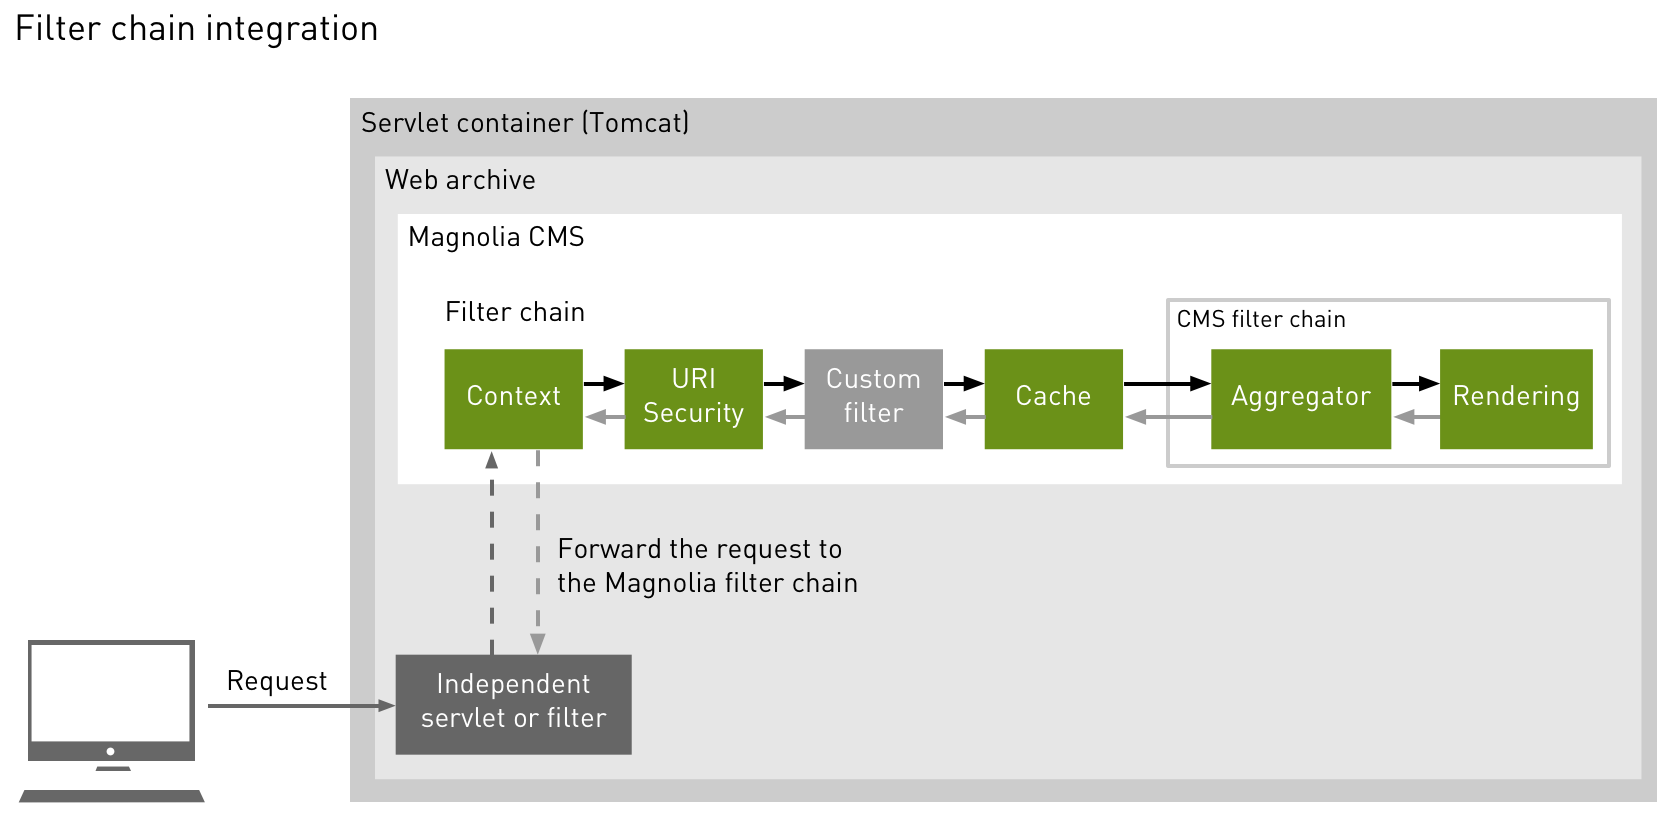 Filter chain integration